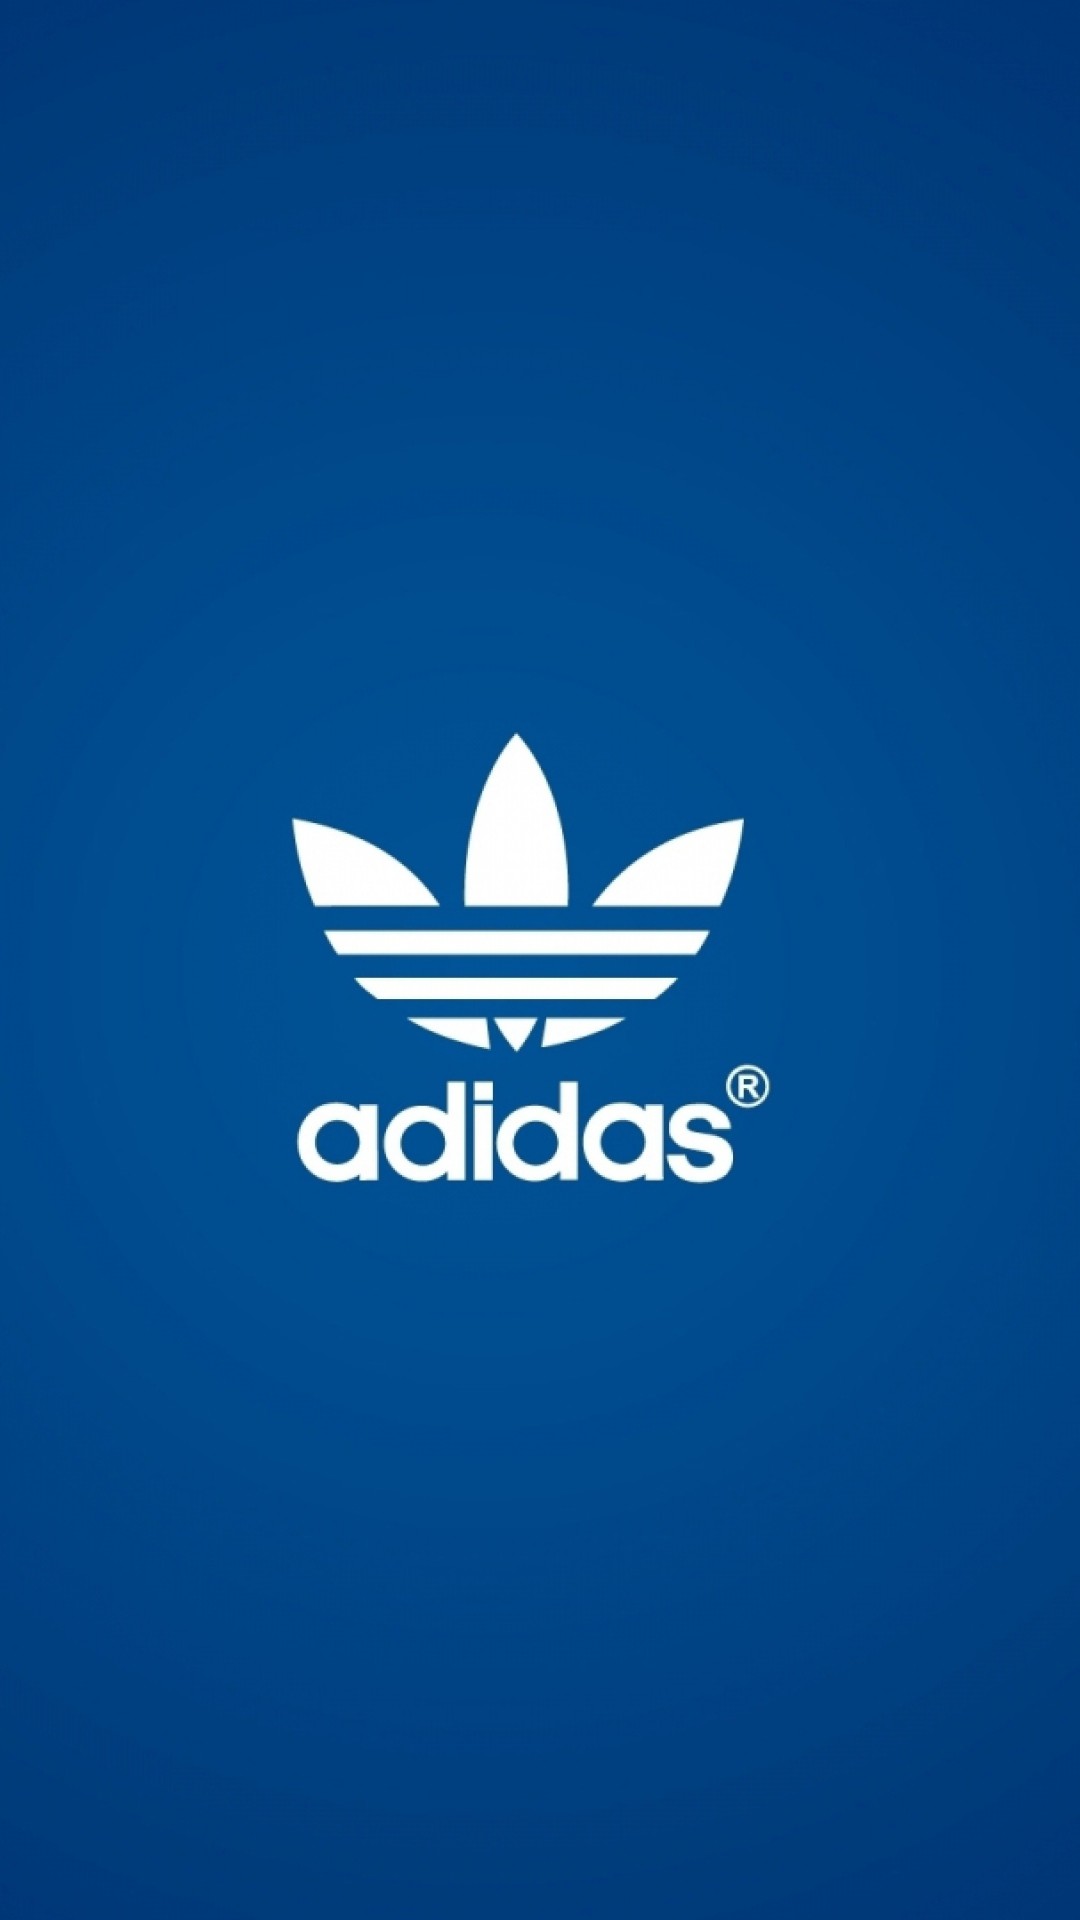 Adidas iPhone Wallpaper Image